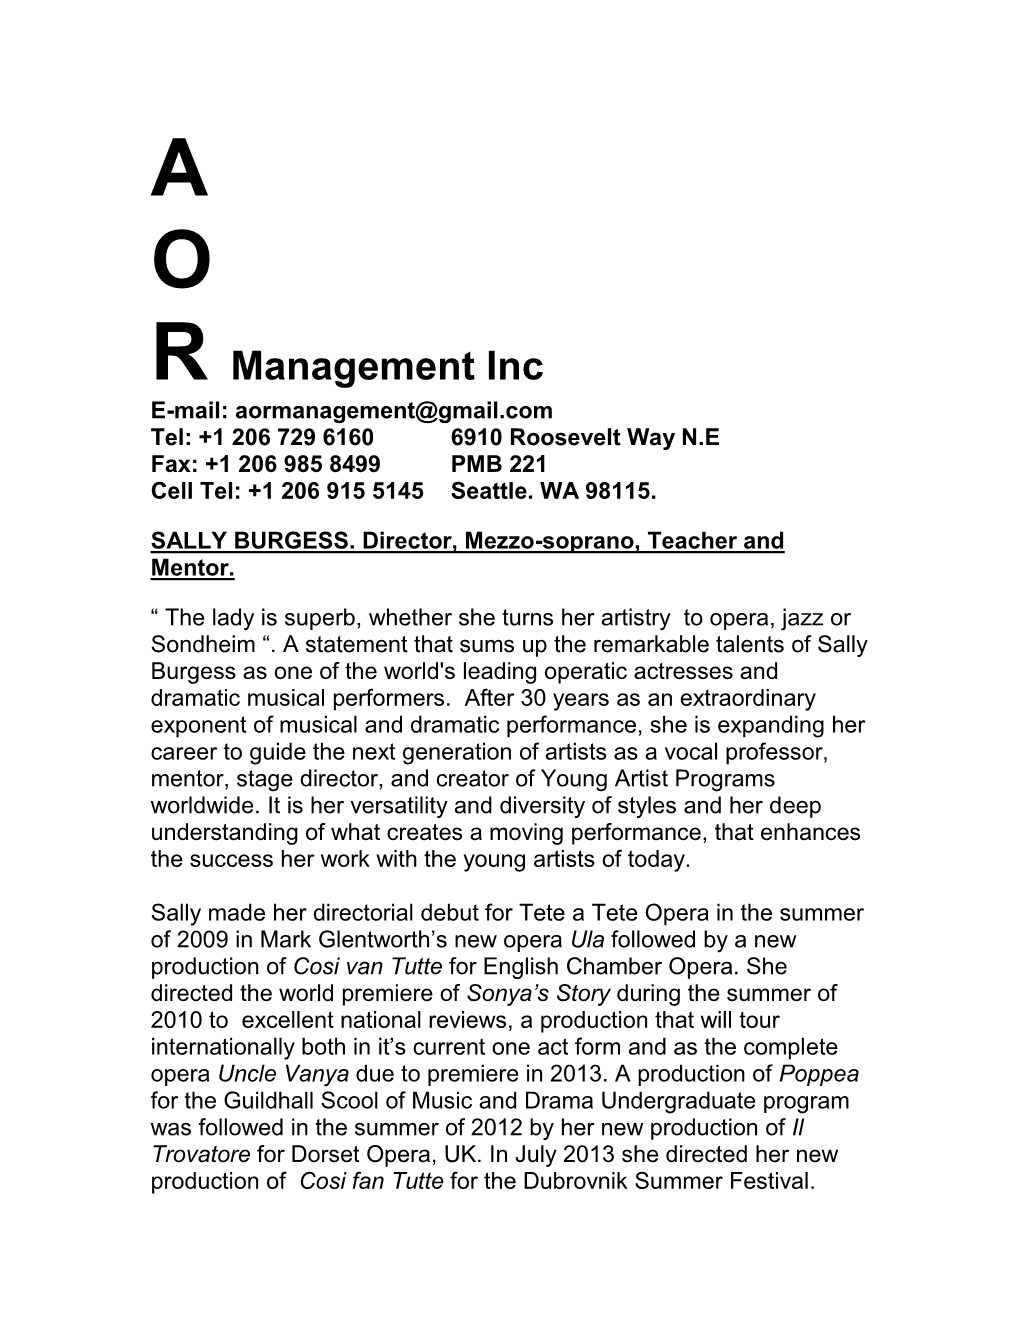 AOR Management Inc